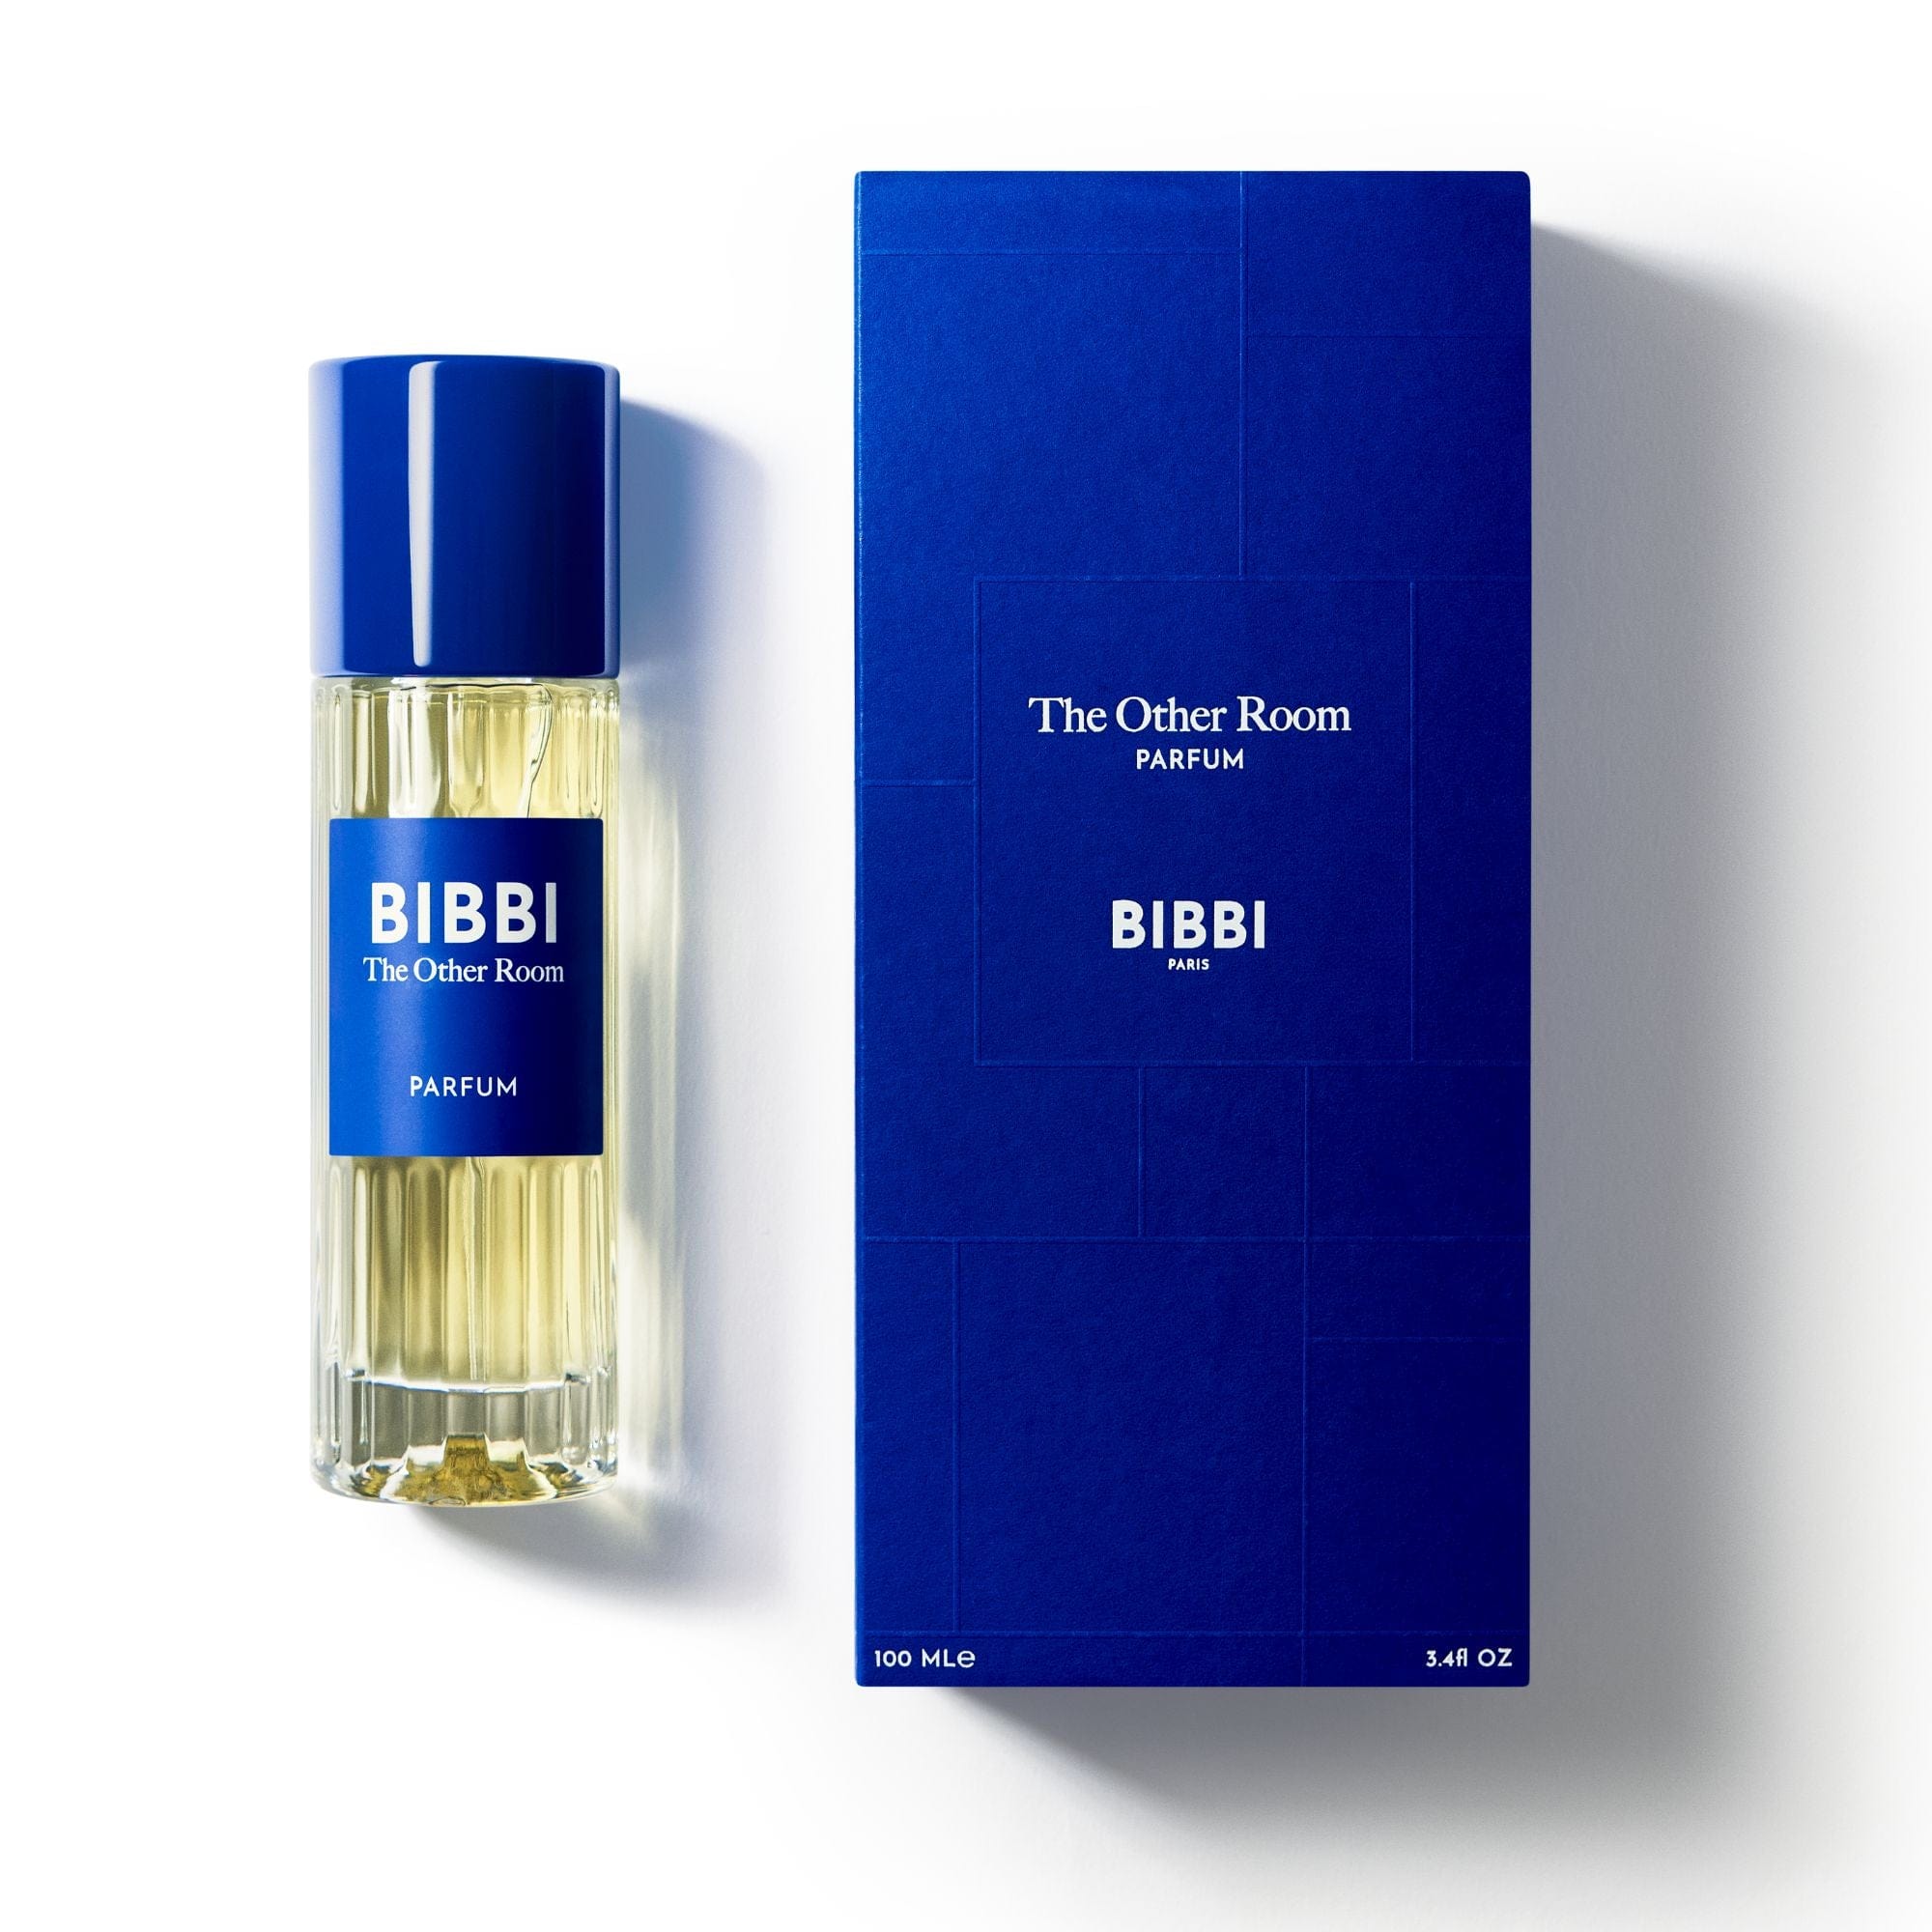 The Other Room BIBBI Eau de Parfum